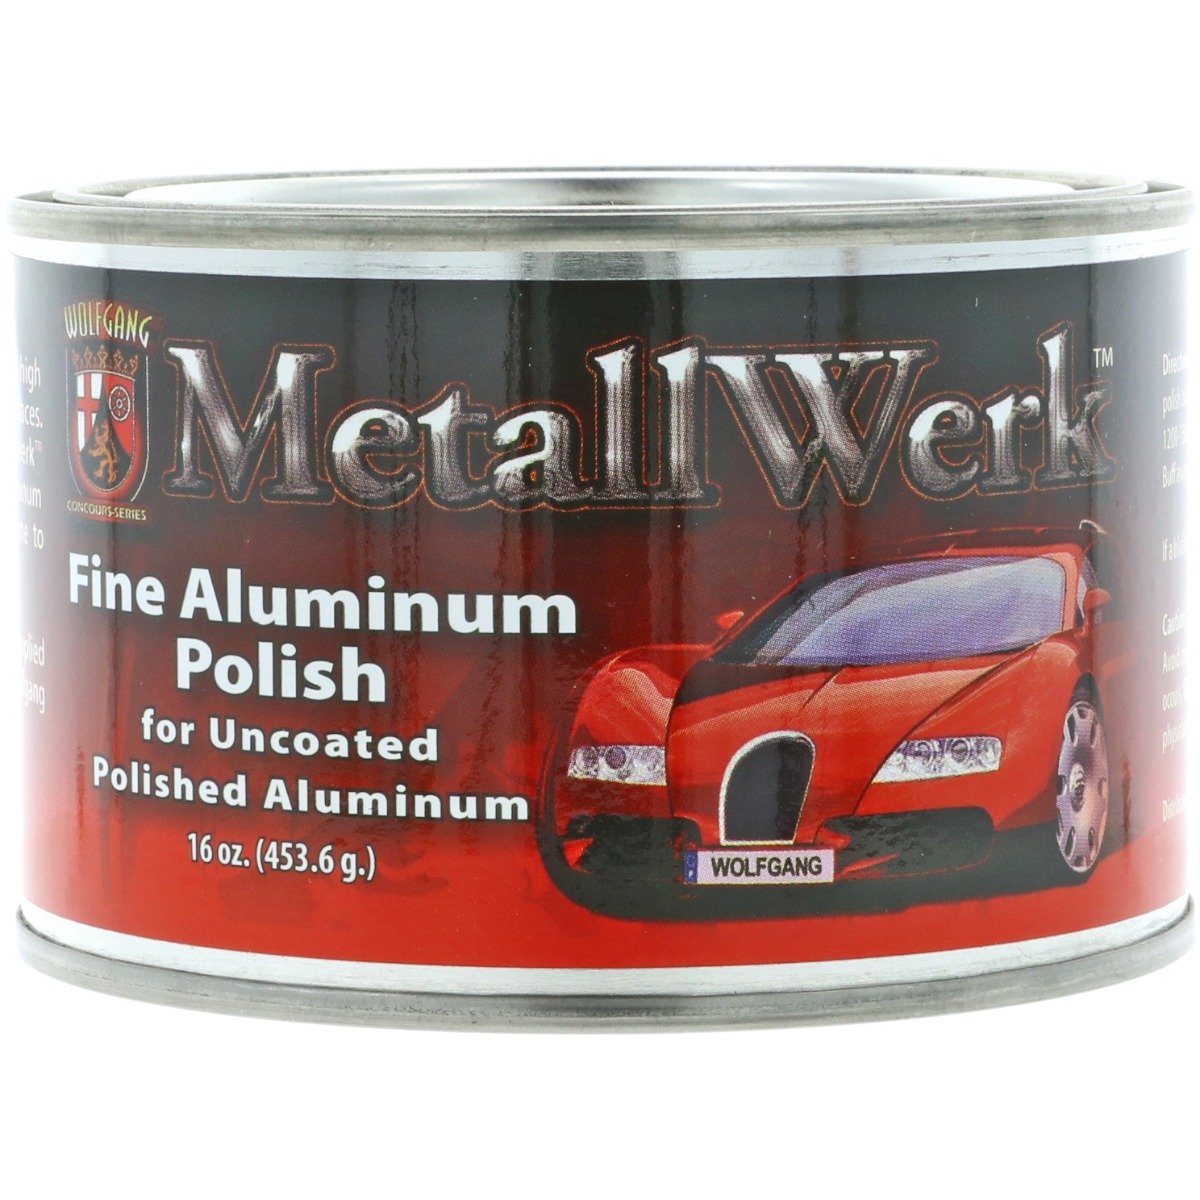 MetallWerk Fine Aluminum Polish - 453g